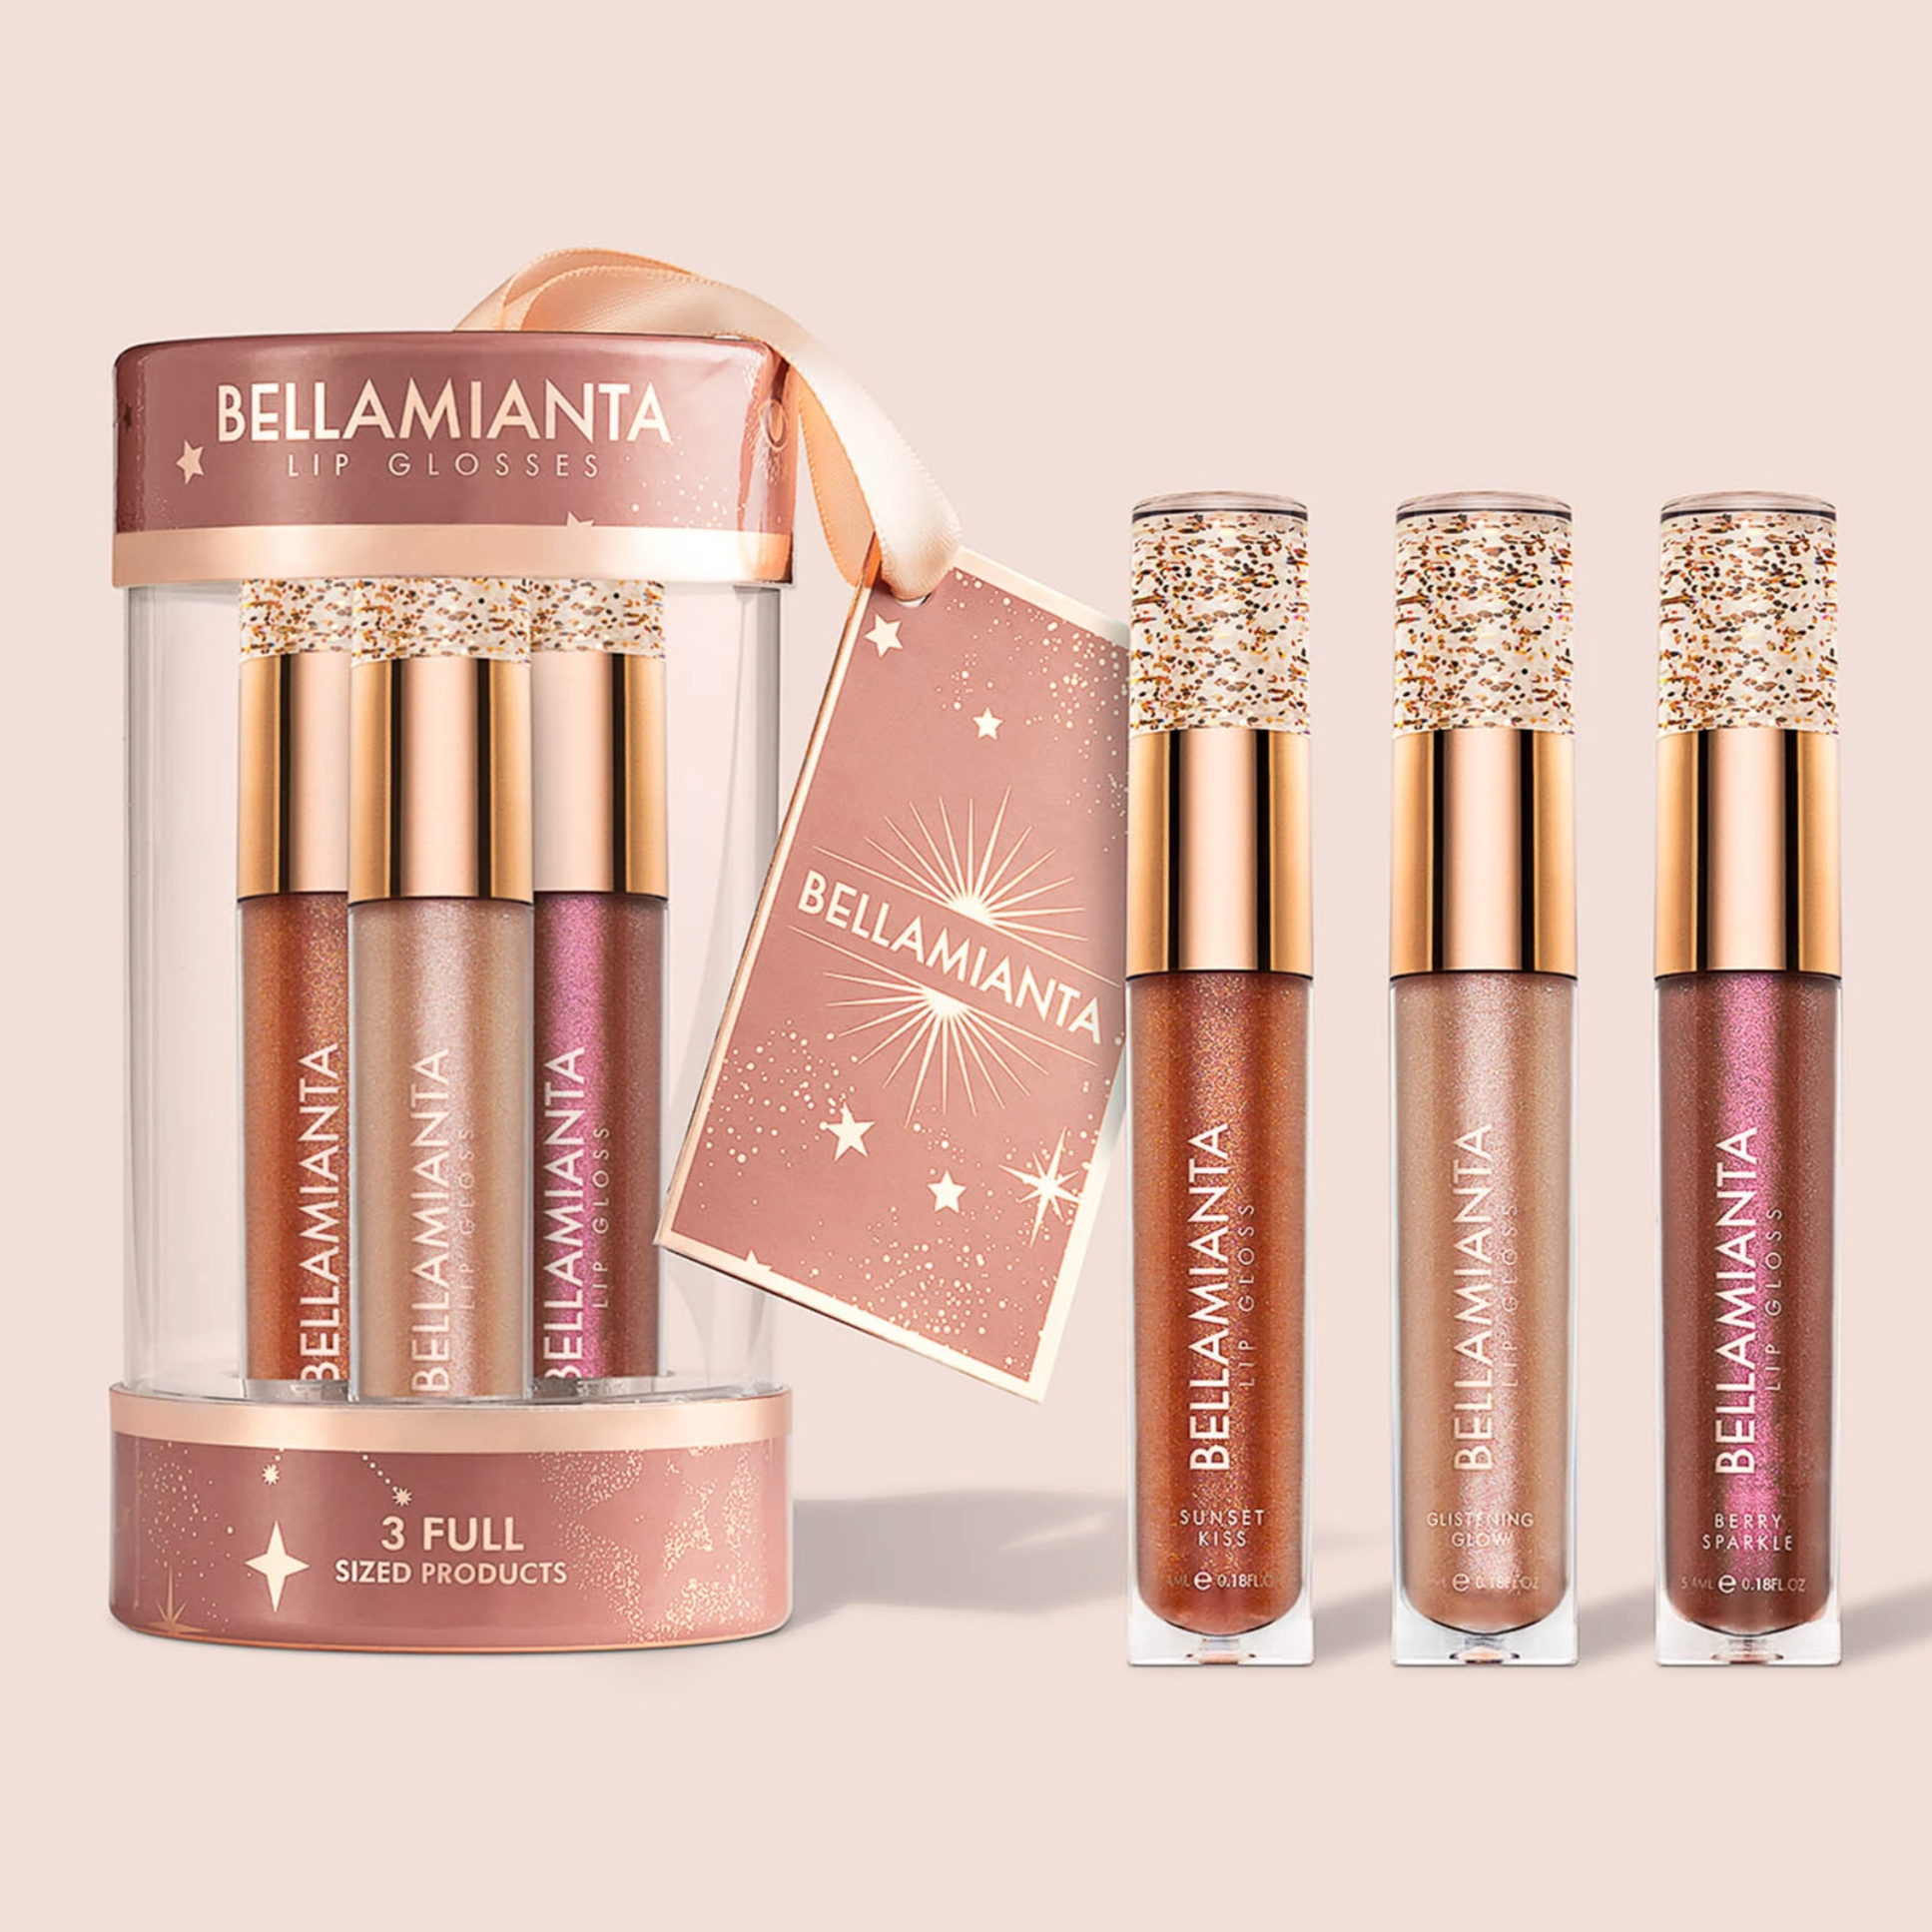 BELLAMIANTA Lip Gloss Gift Set, open